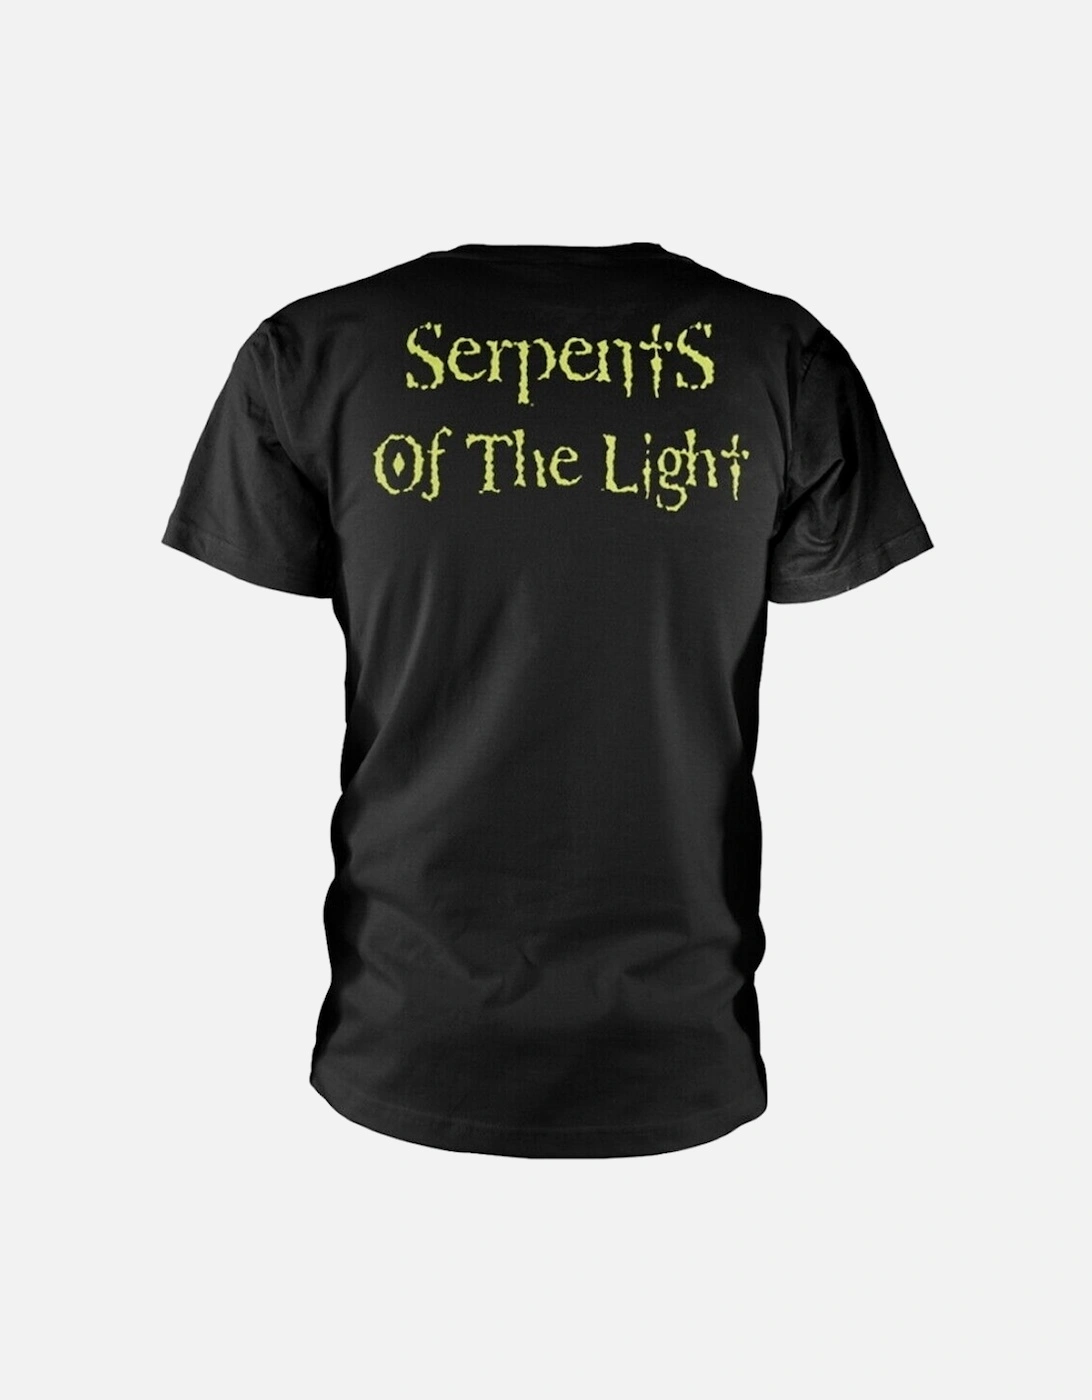 Unisex Adult Serpents Of The Light T-Shirt